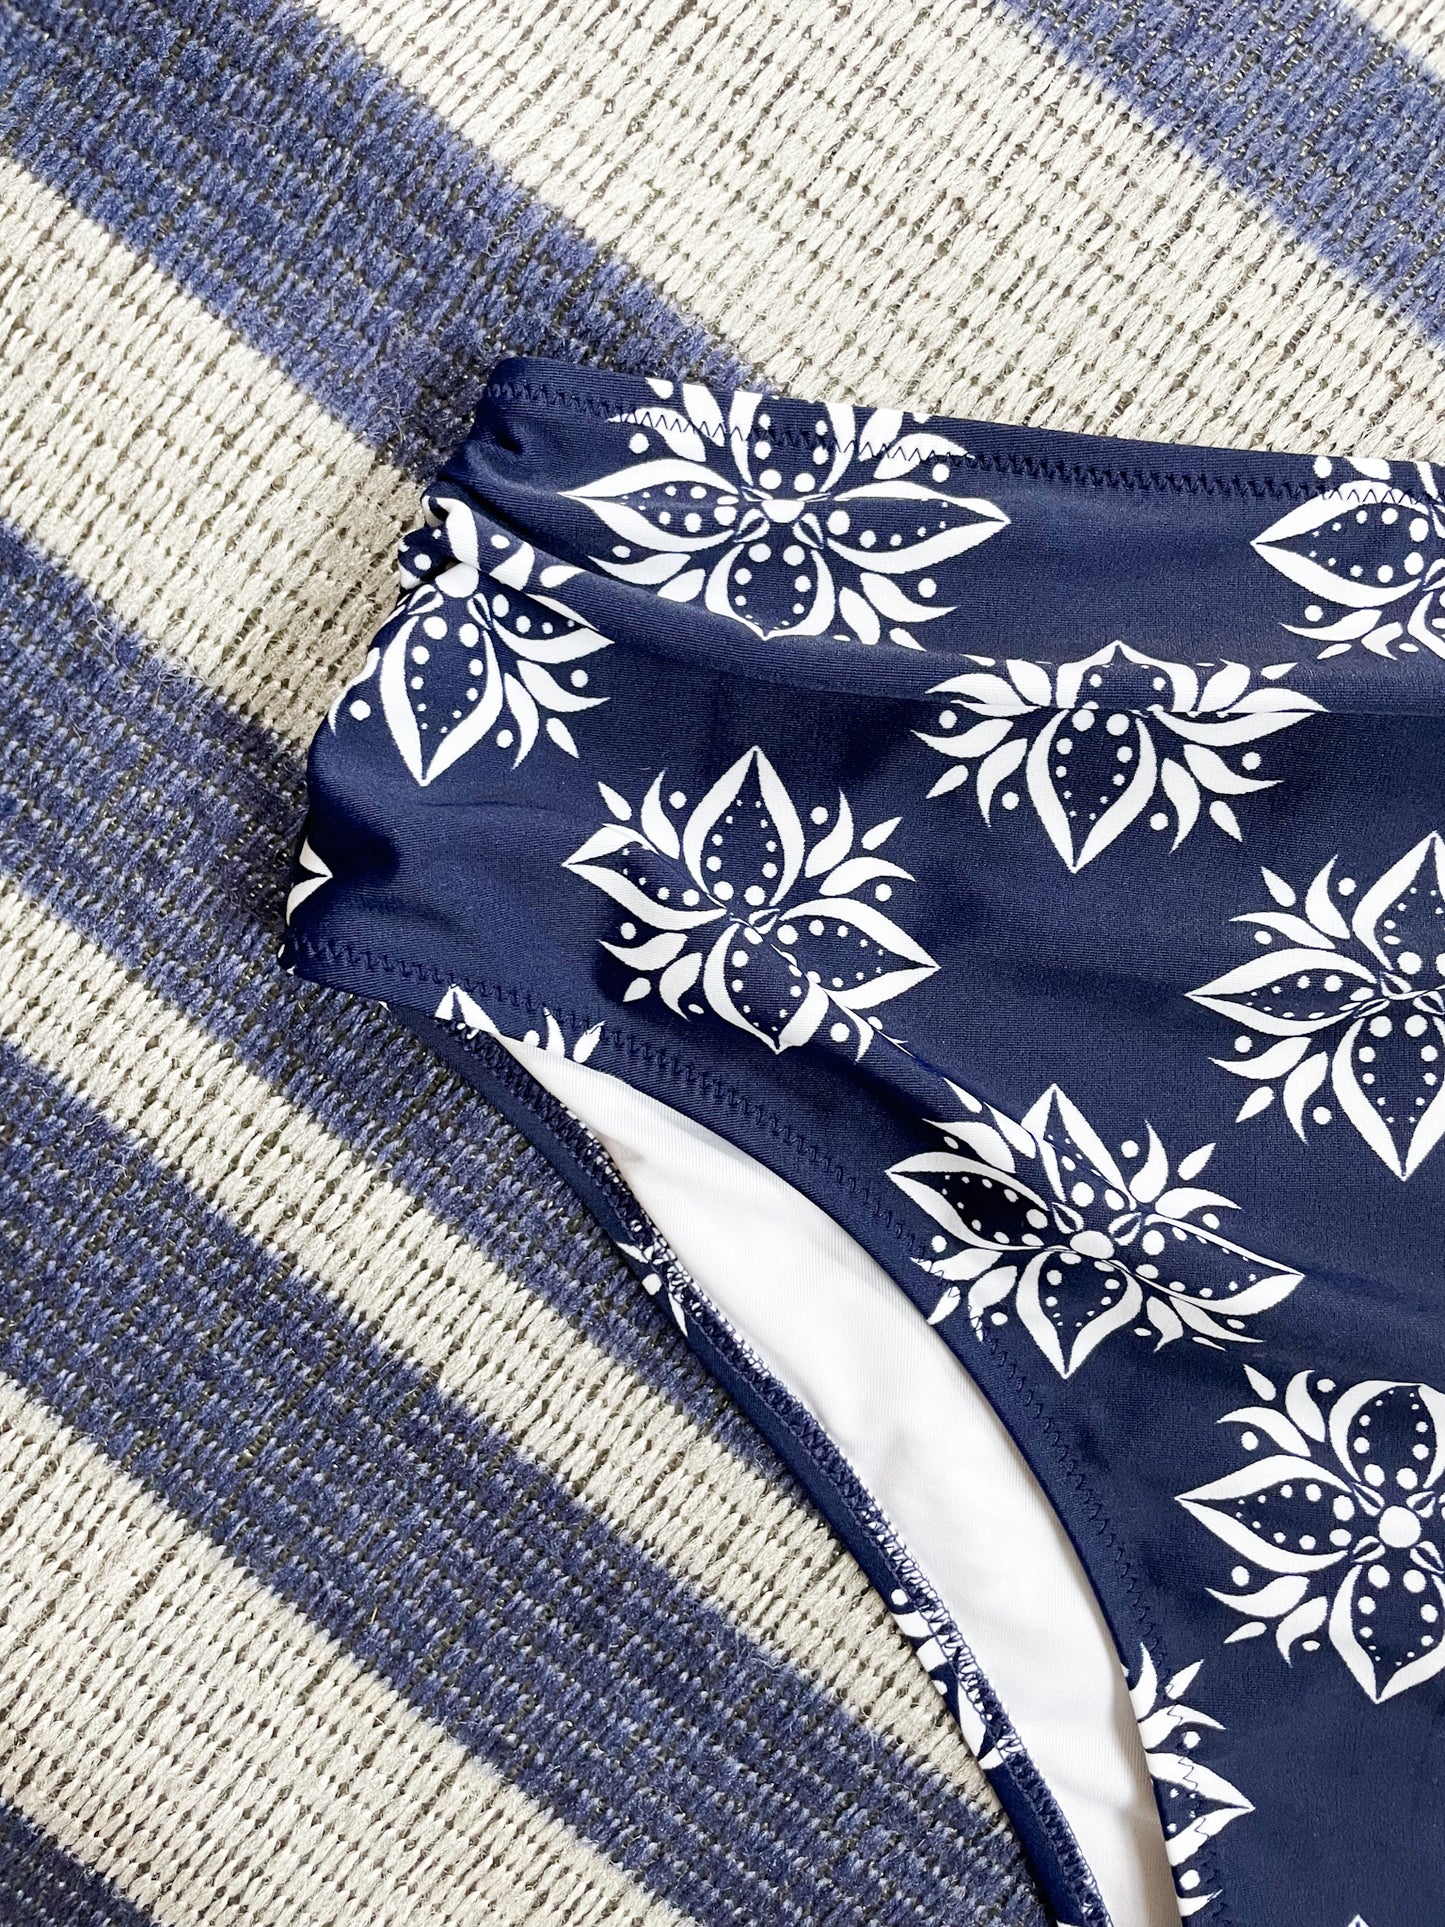 Cupshe Navy Floral High-Waisted Bikini Bottoms NWT - Medium